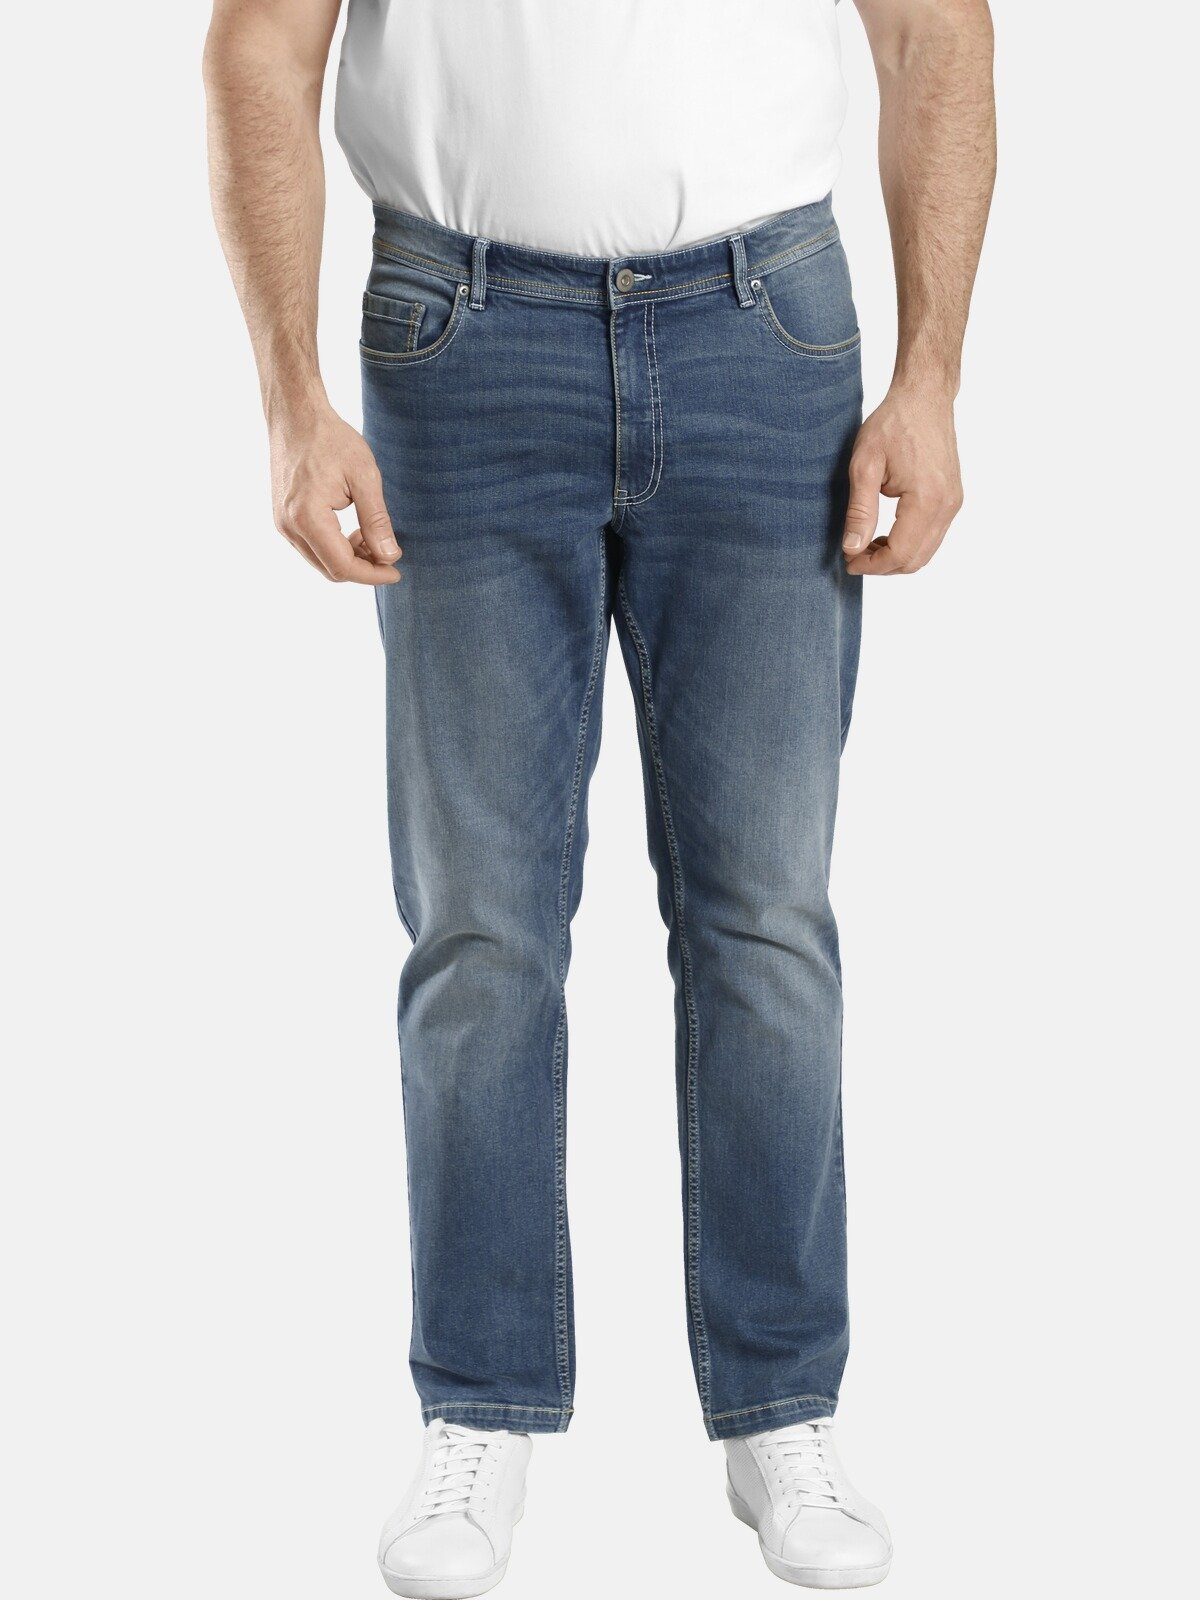 Colby Kollektion, stretchig 5-Pocket-Jeans BARON GIVENS +Fit Charles